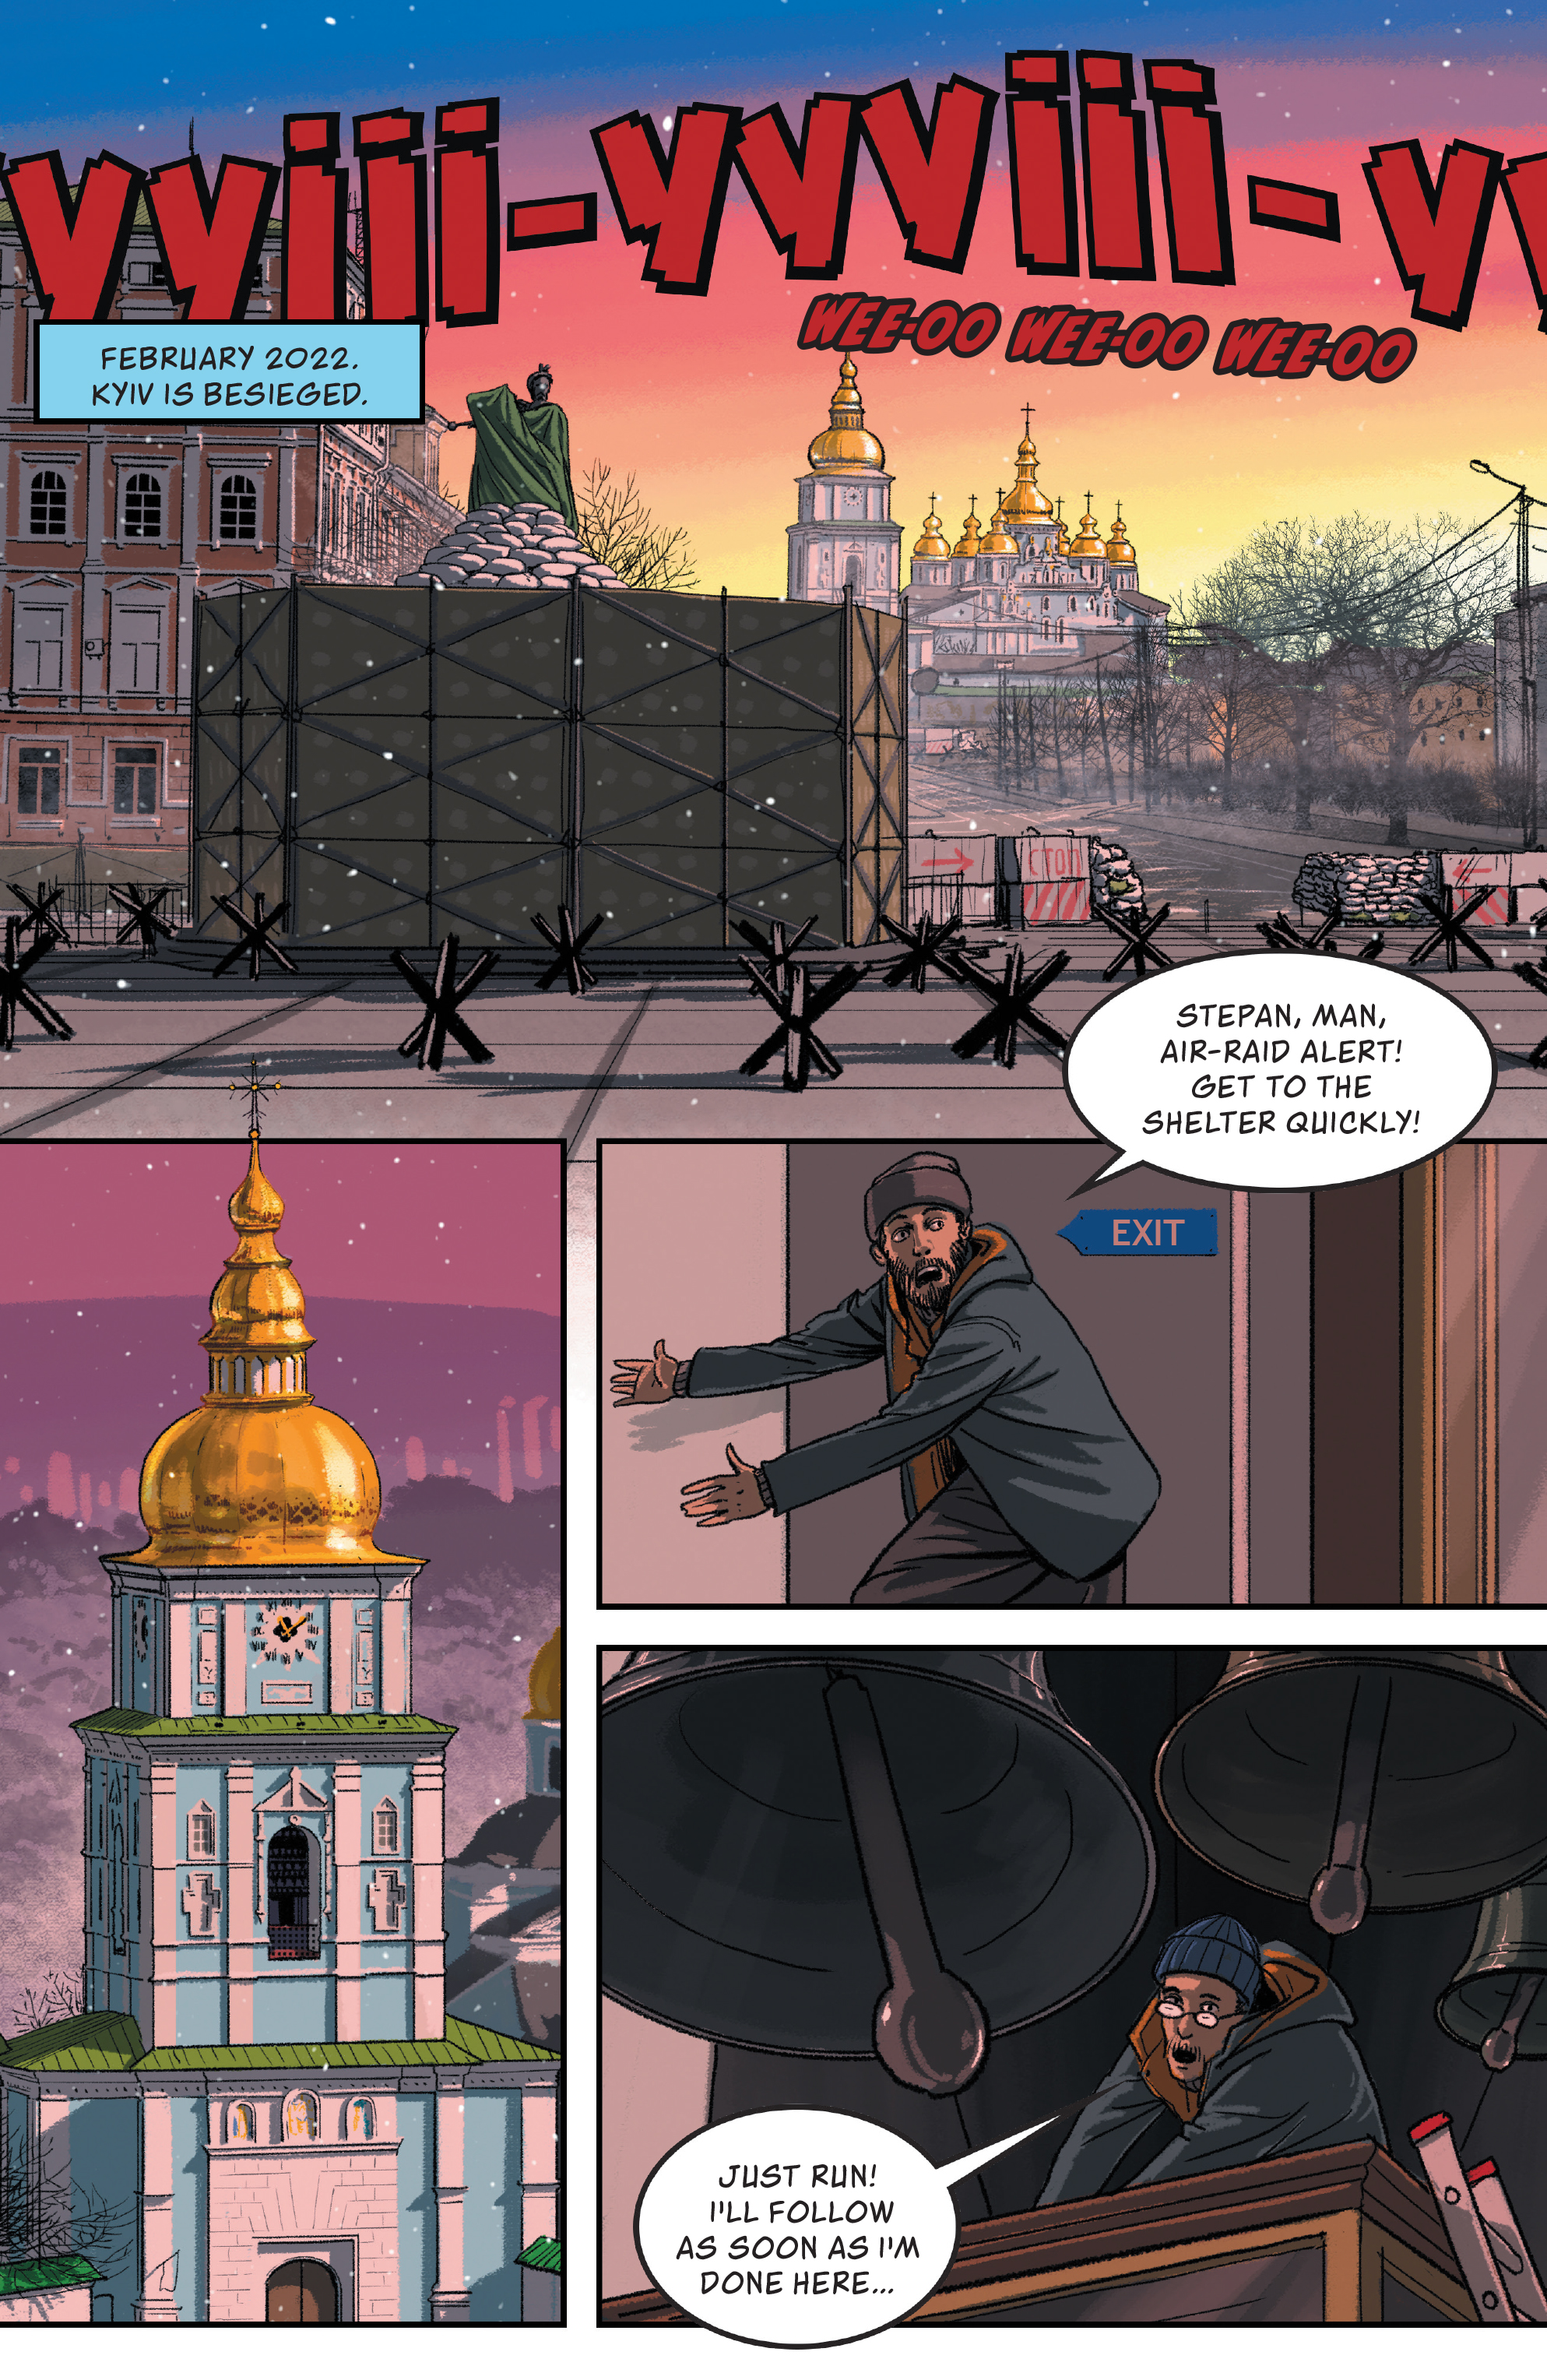 Peremoha Victory For Ukraine Graphic Novel